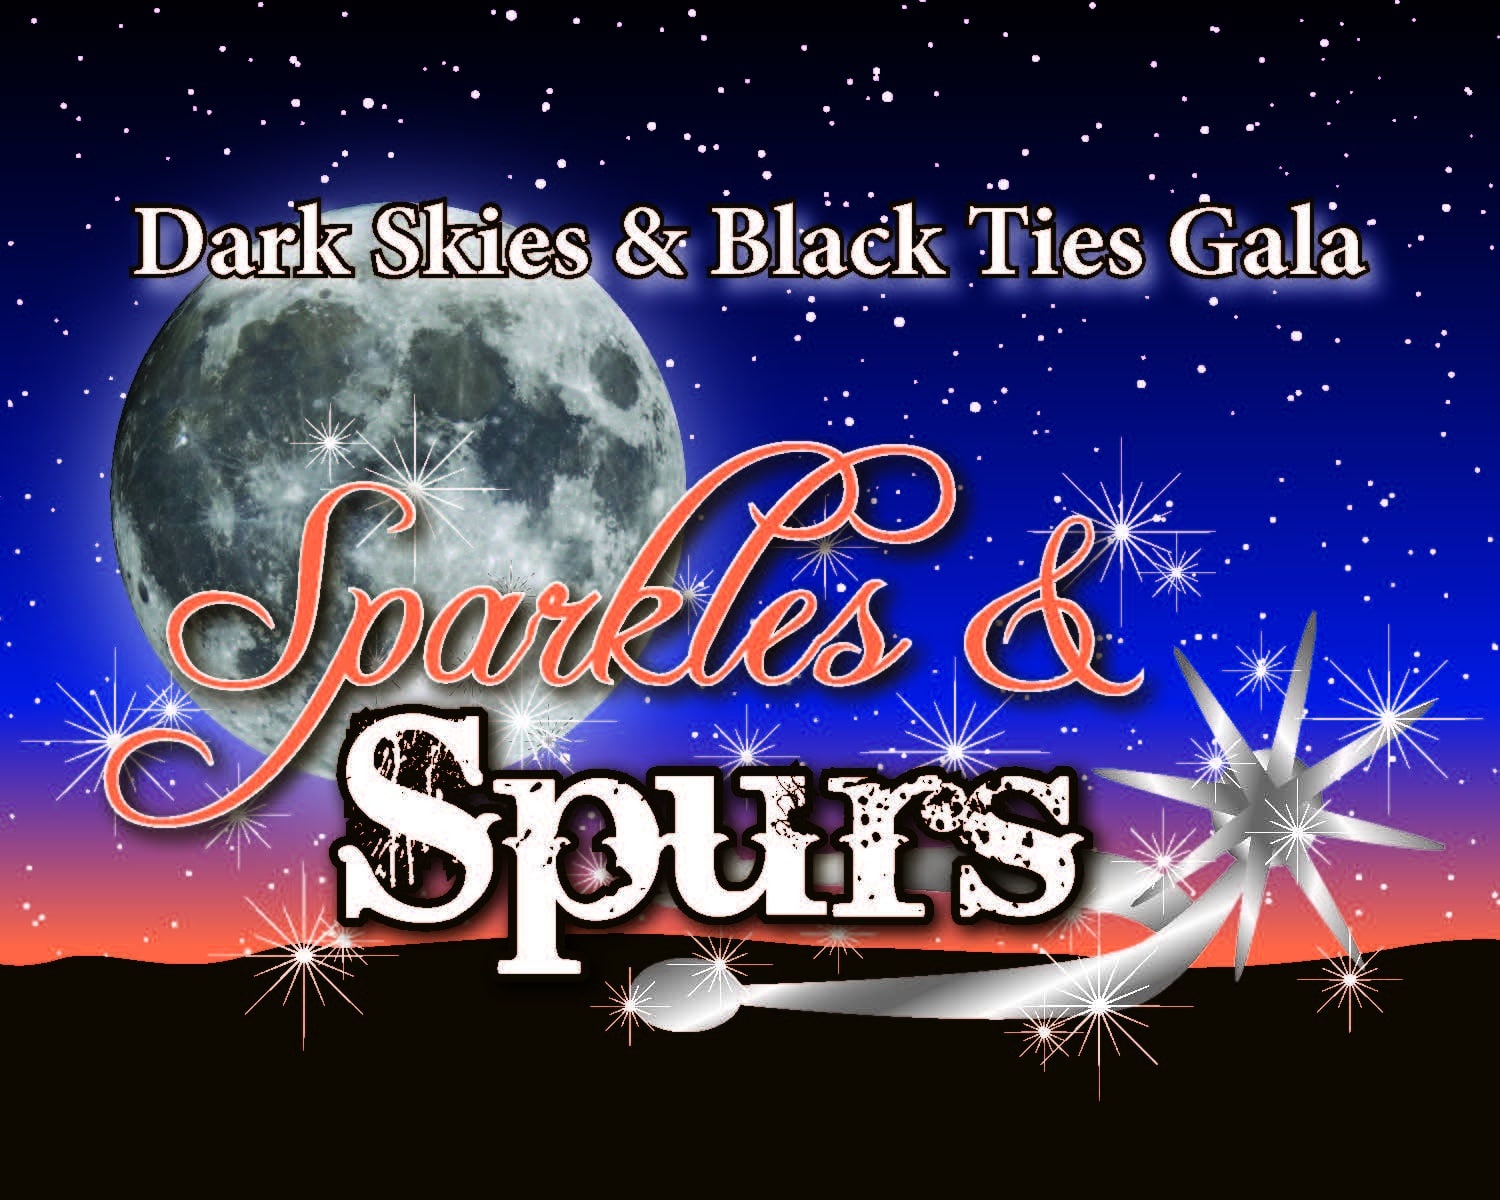 2015 Sparkles and Spurs gala logo